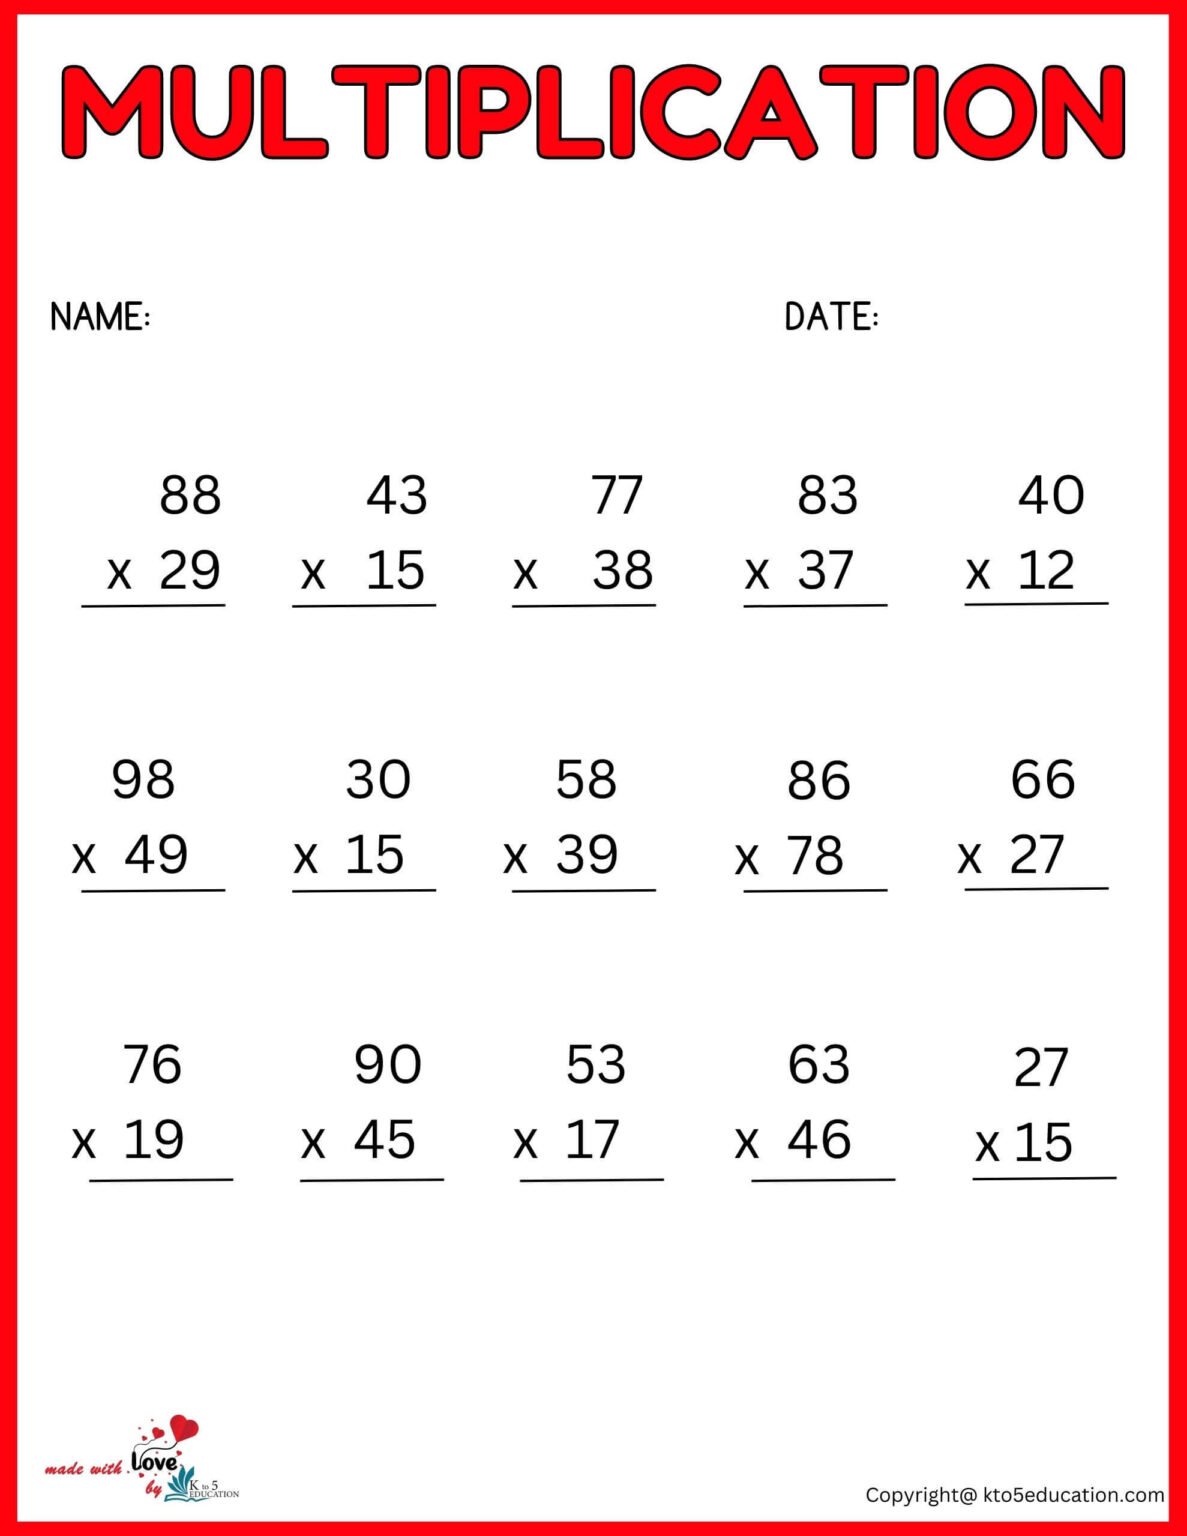 Multiplication Worksheet For Third Grade FREE Download